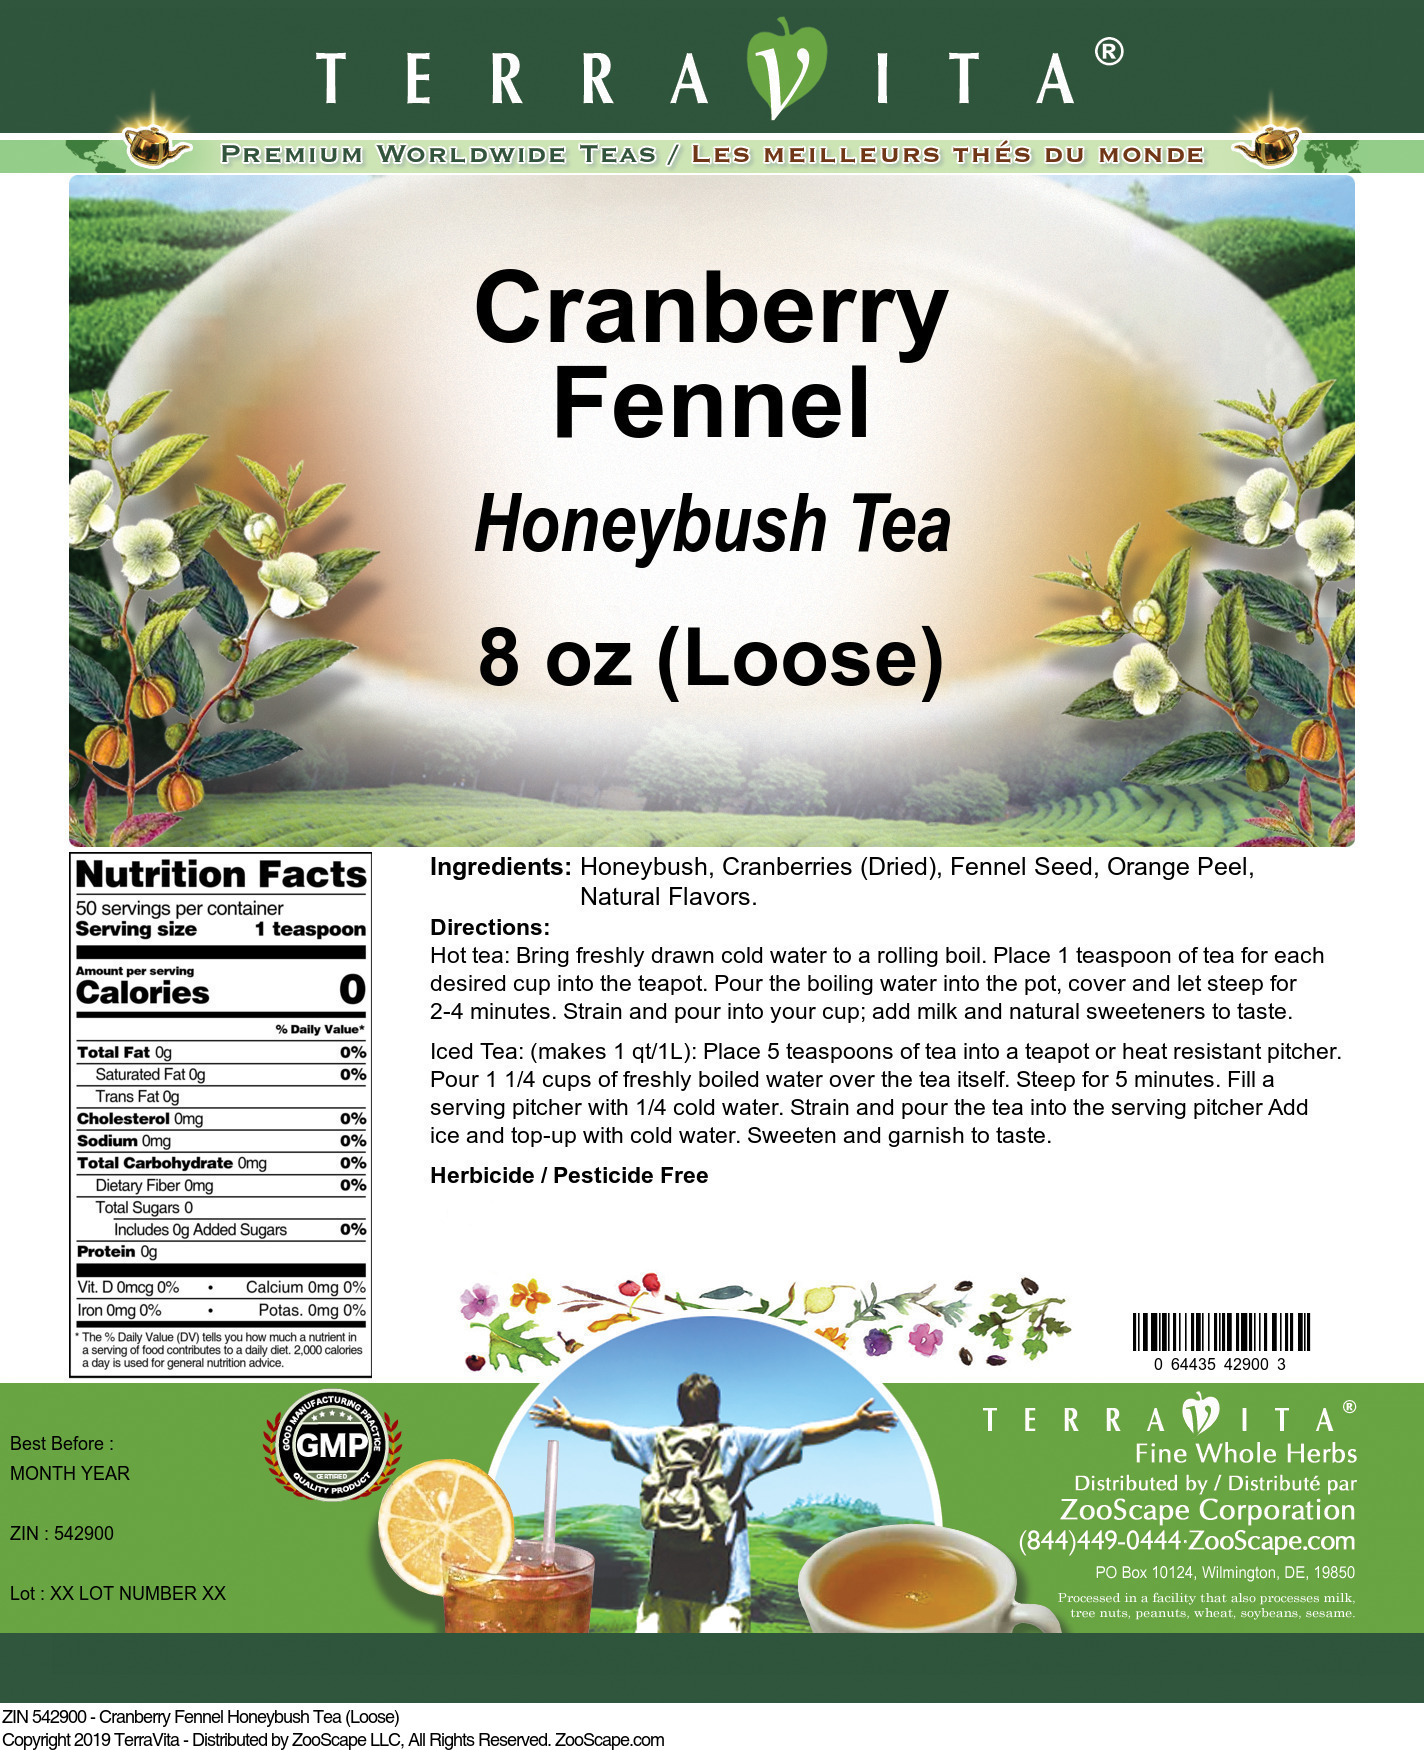 Cranberry Fennel Honeybush Tea (Loose) - Label